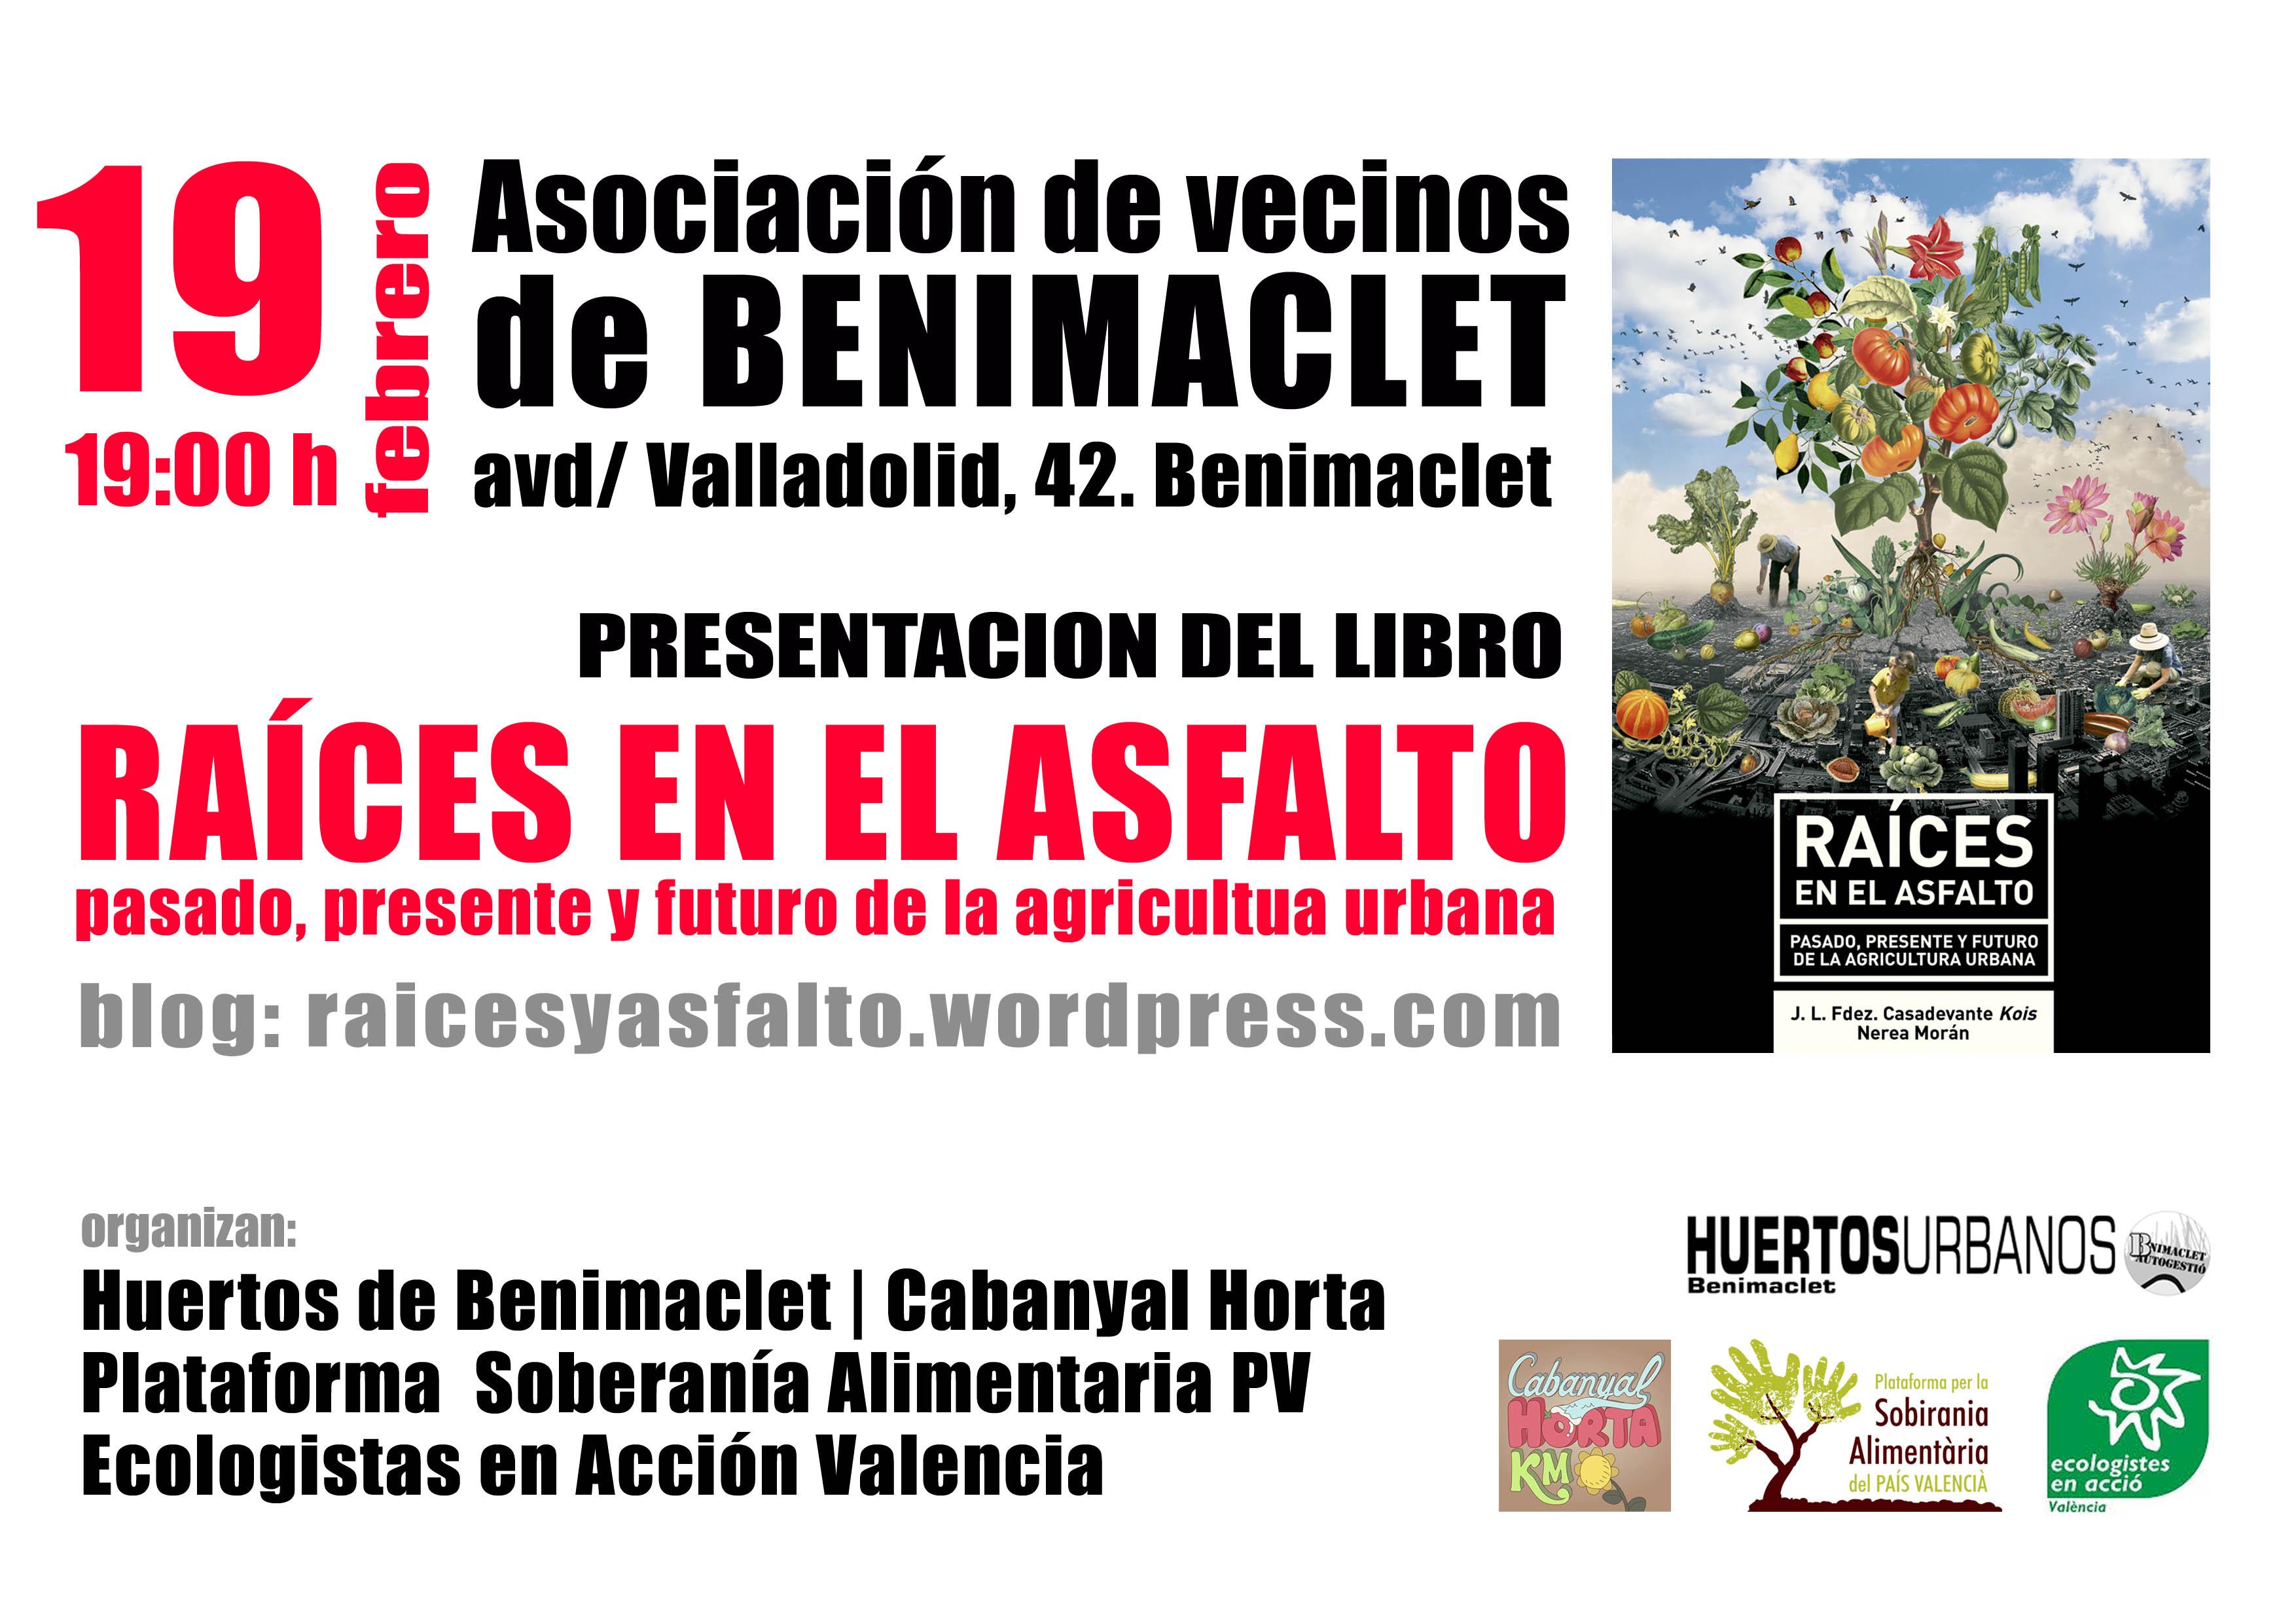 Presentació del llibre «Raices en el Asfalto» de Jose Luis Fernandez Casadevante “Kois” i Nerea Morán.